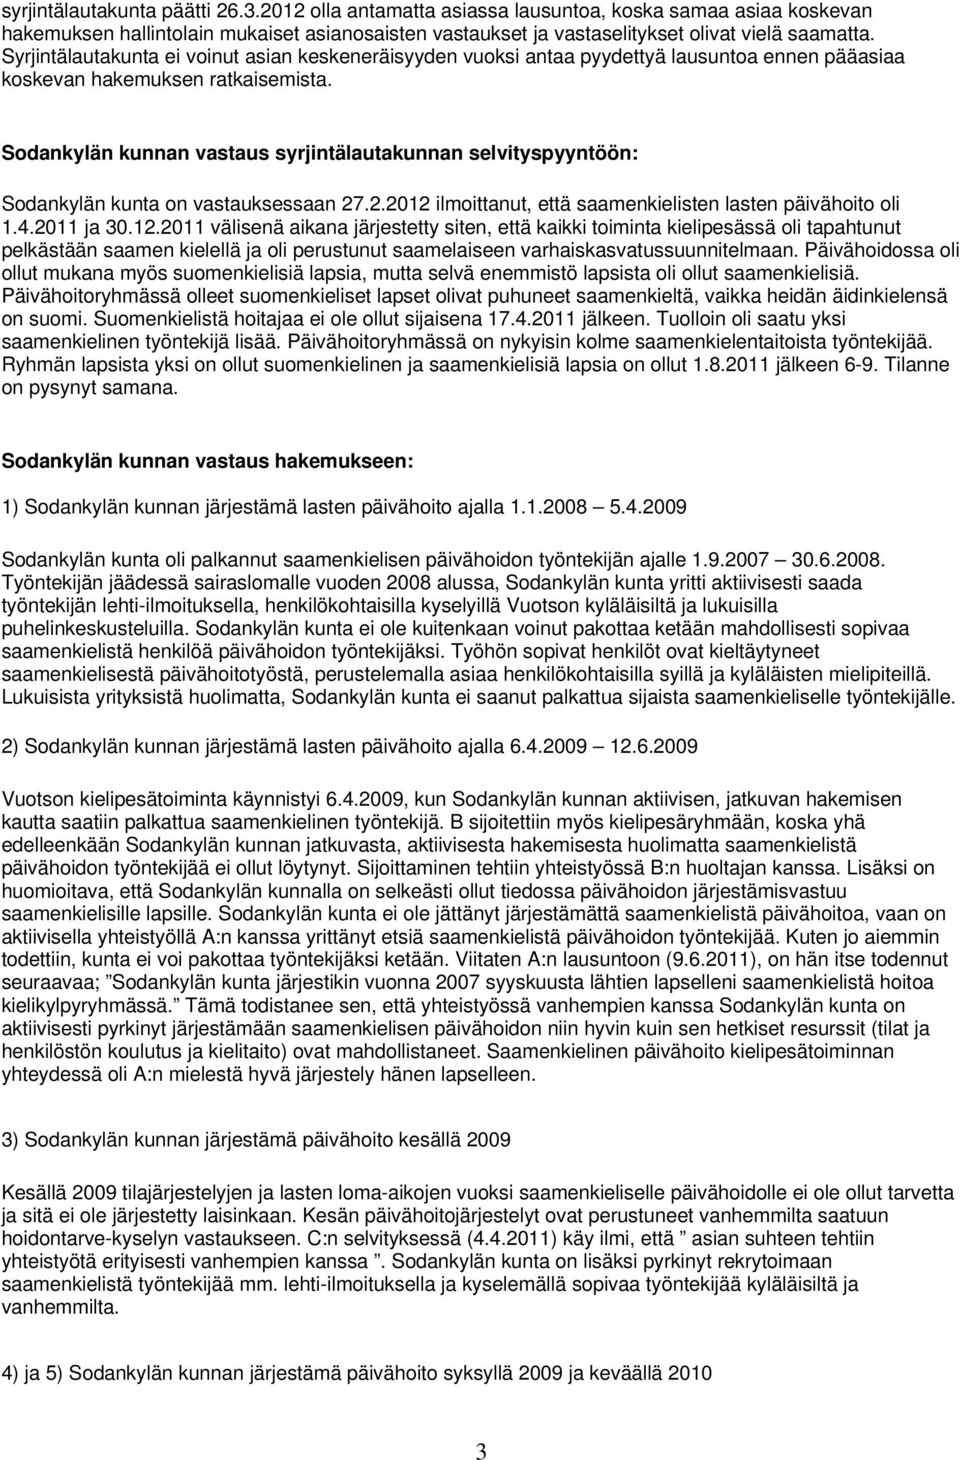 Sodankylän kunnan vastaus syrjintälautakunnan selvityspyyntöön: Sodankylän kunta on vastauksessaan 27.2.2012 